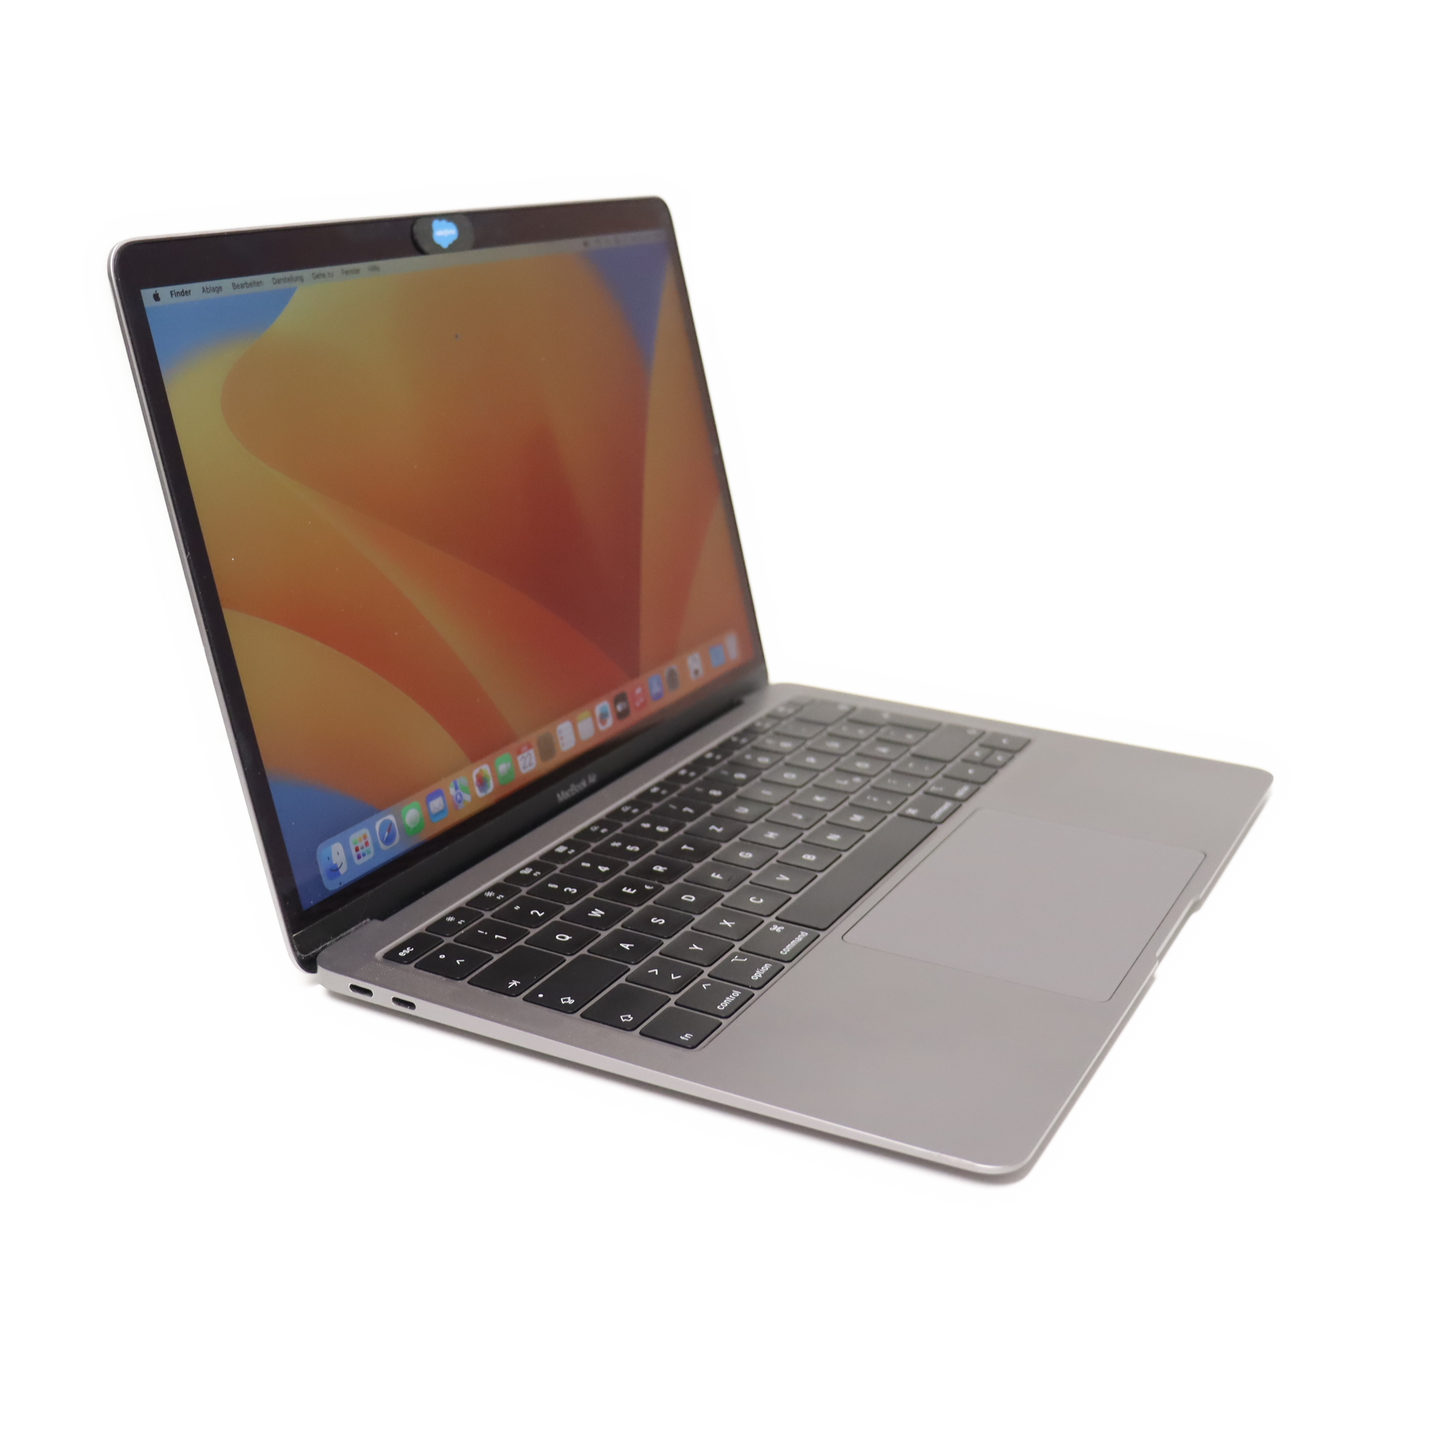 Apple MacBook Air 13,3 Zoll 256 GB i5 UHD Graphics 617 8GB RAM